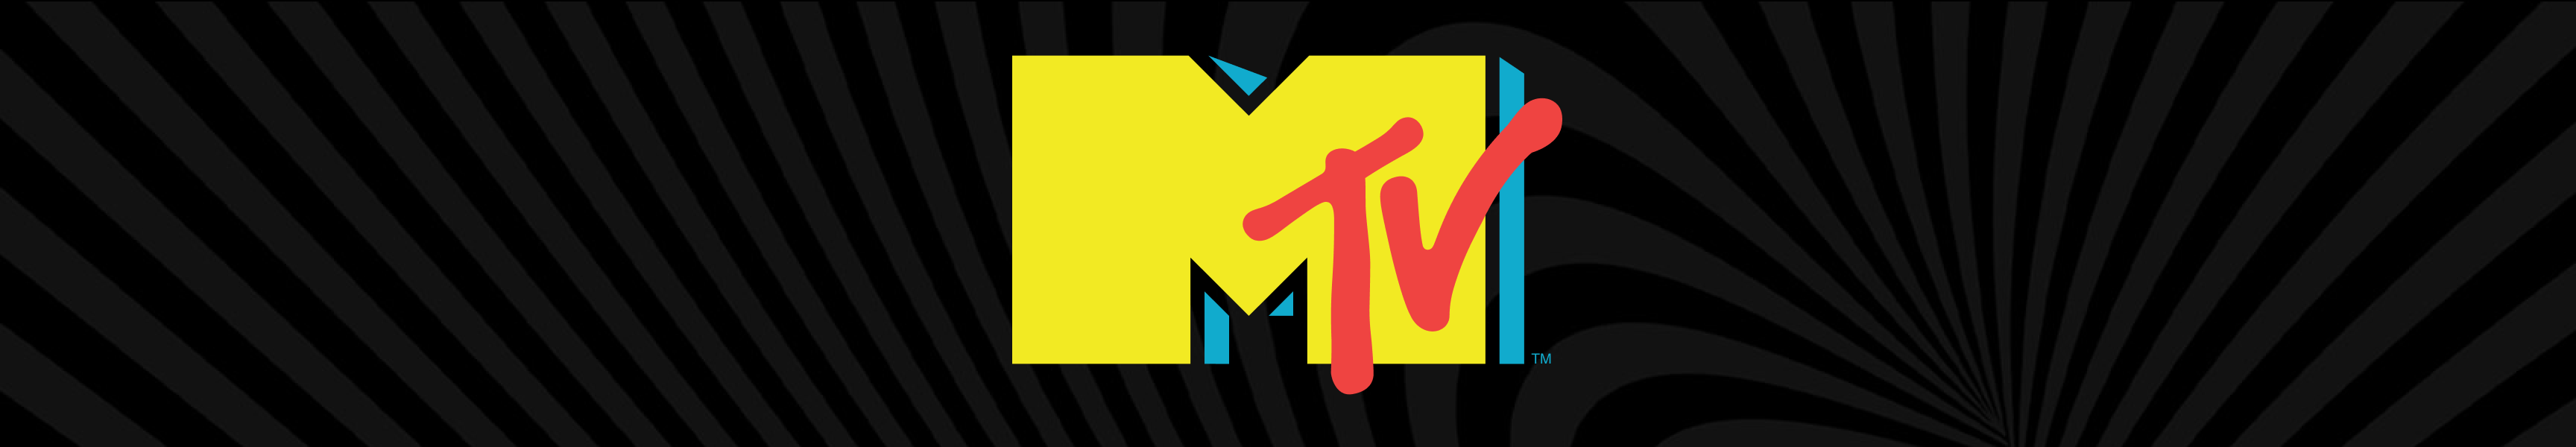 Robes MTV